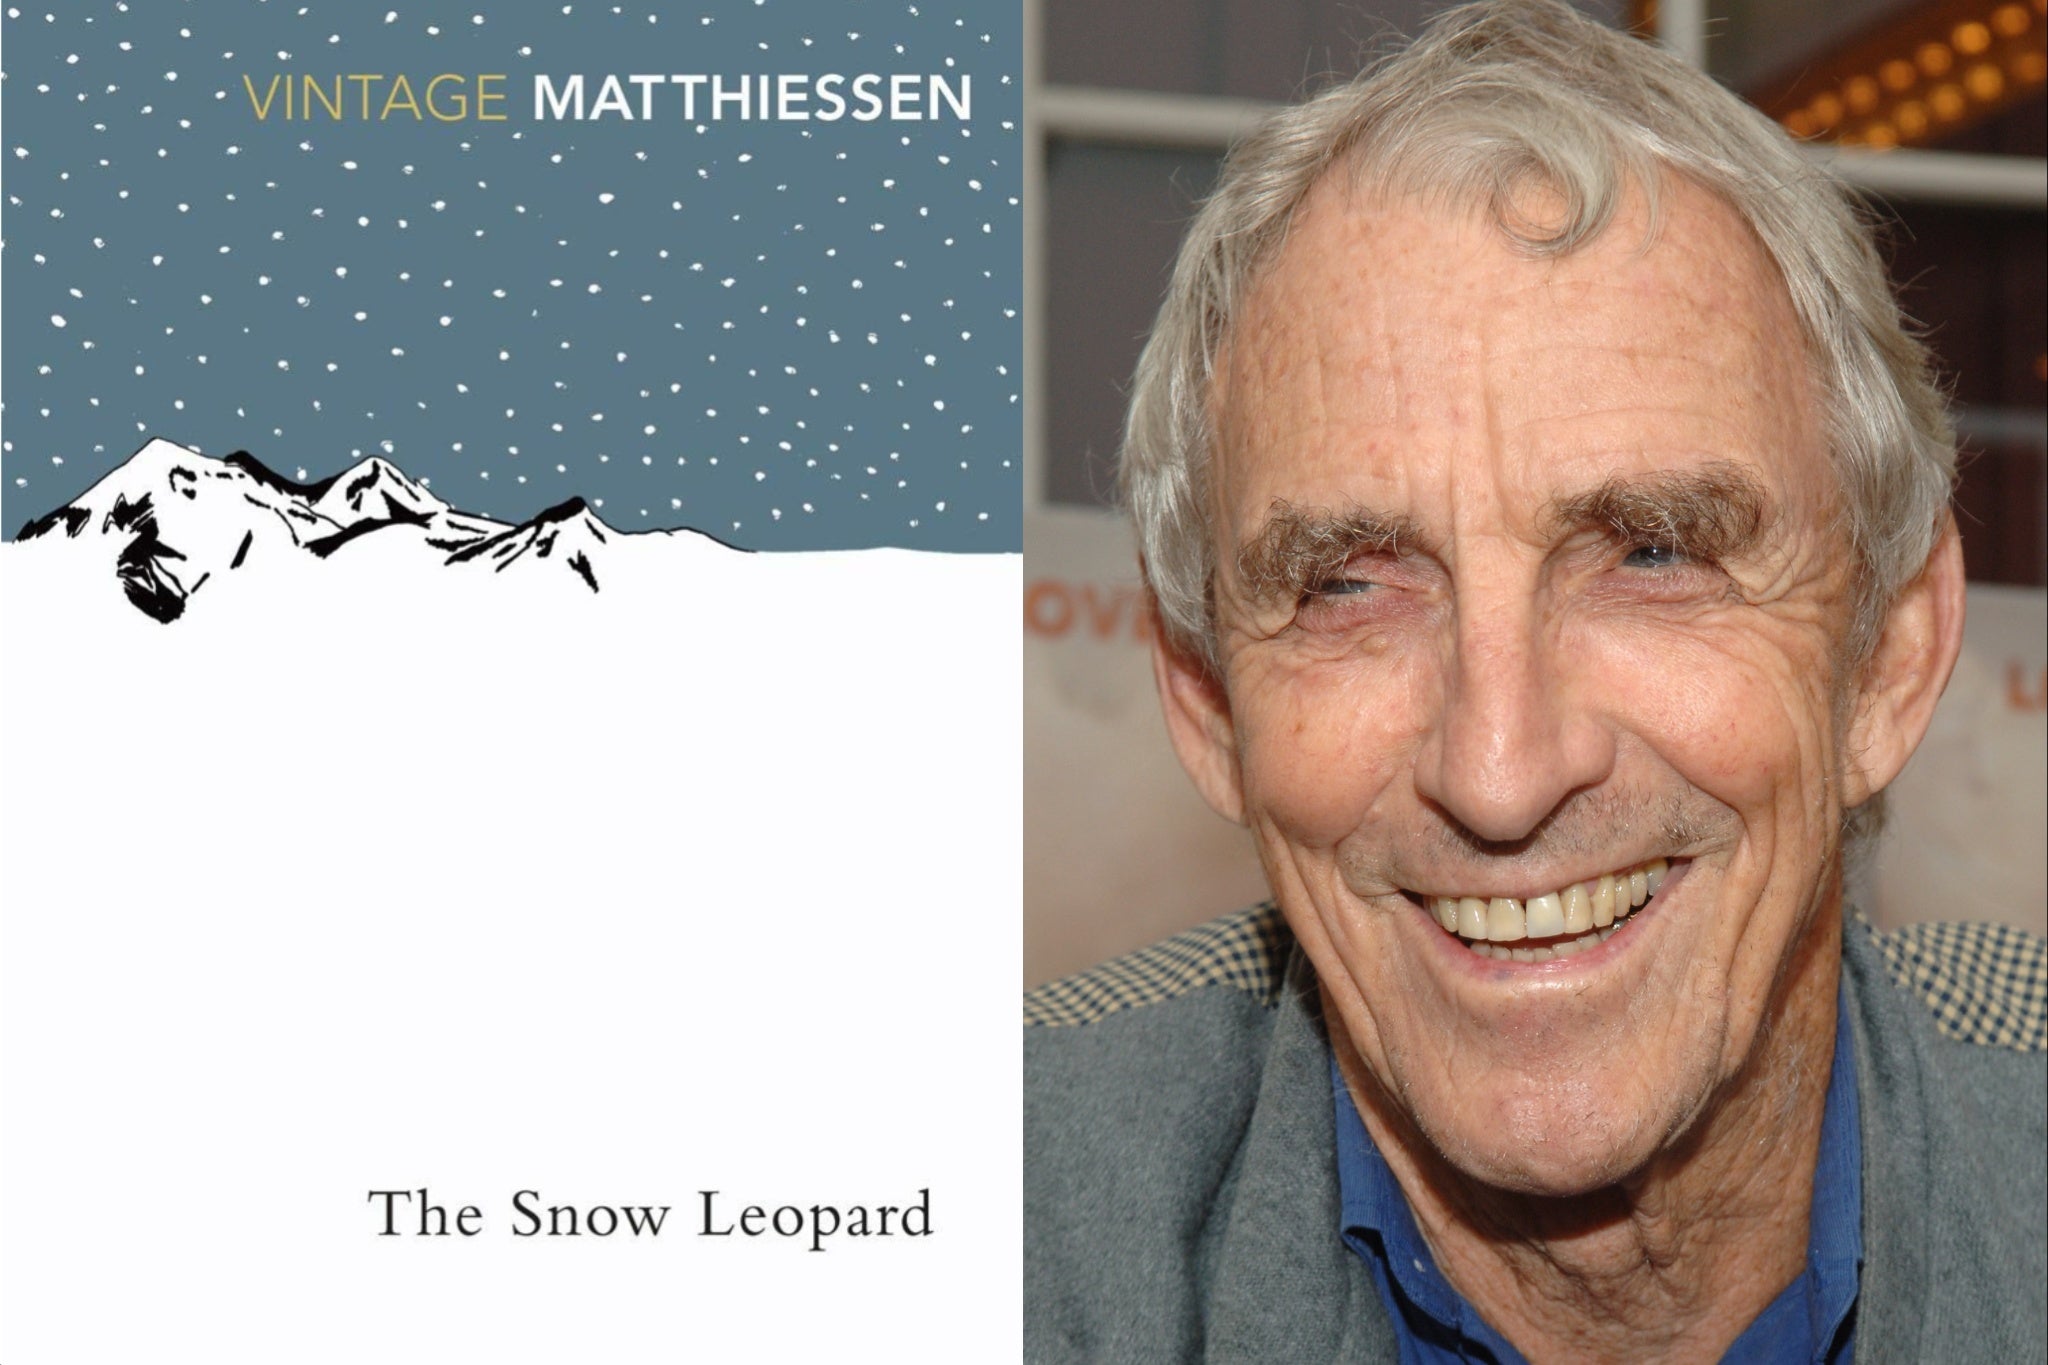 Peter Mattiessen, author of ‘The Snow Leopard'